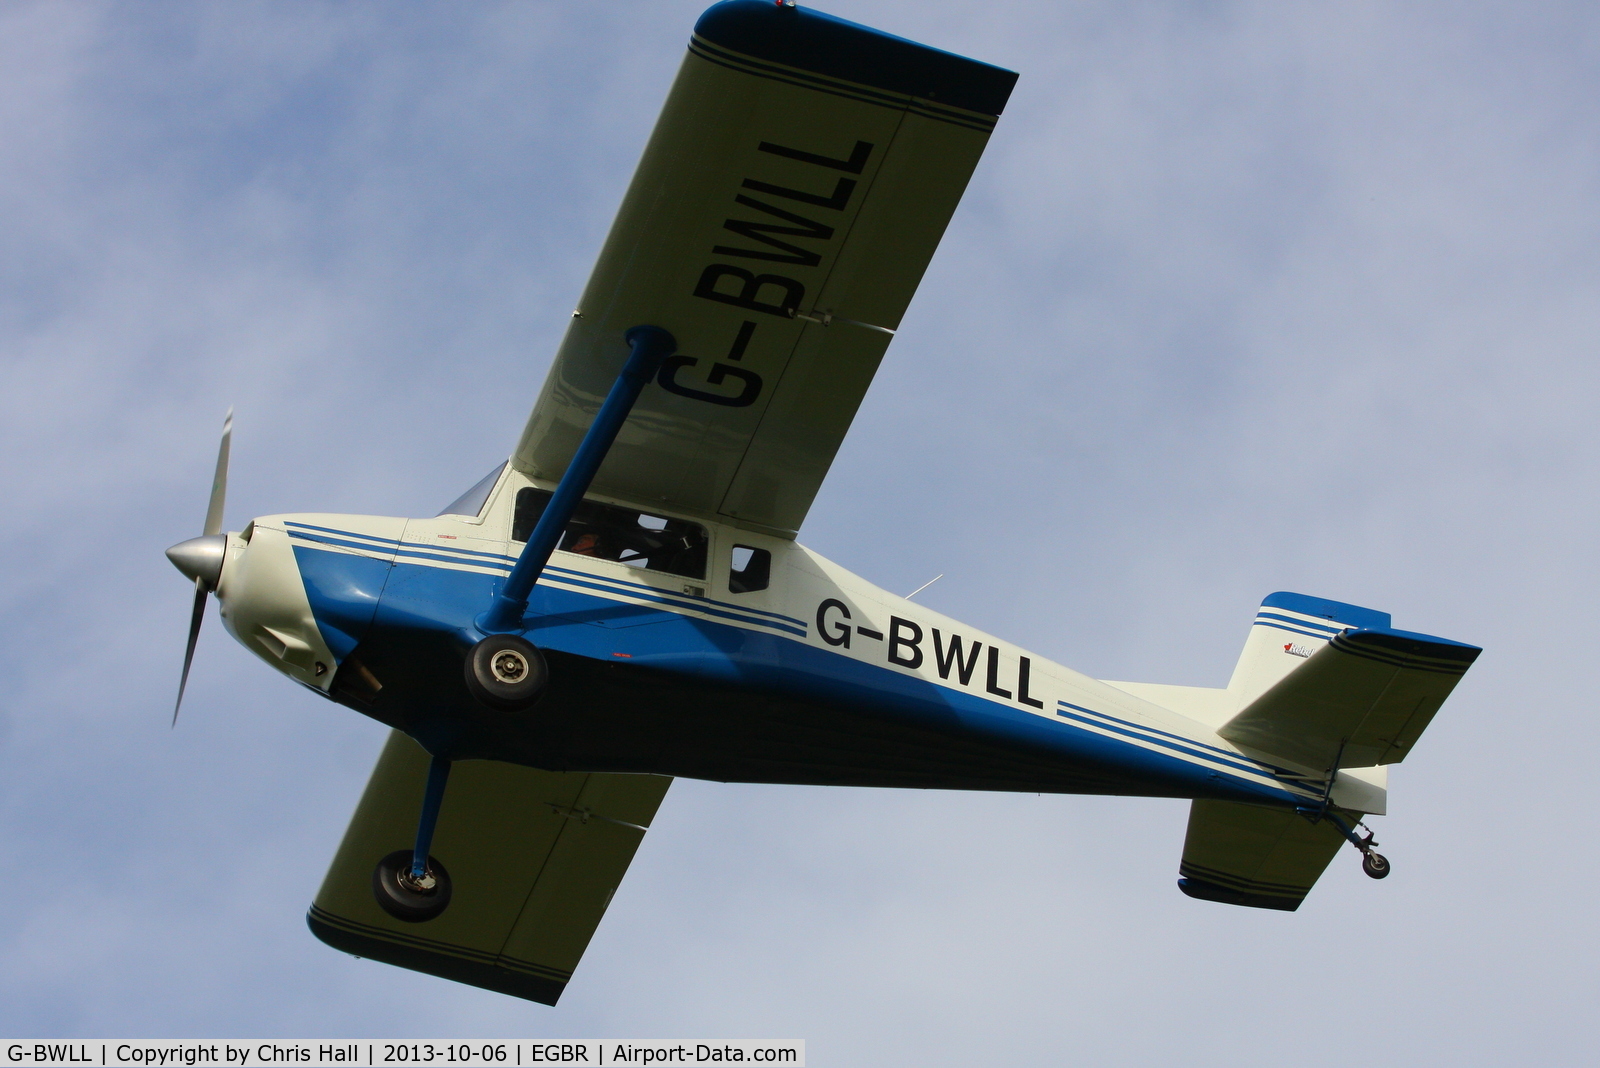 G-BWLL, 1996 Murphy Rebel C/N PFA 232-12499, at Breighton's Pre Hibernation Fly-in, 2013